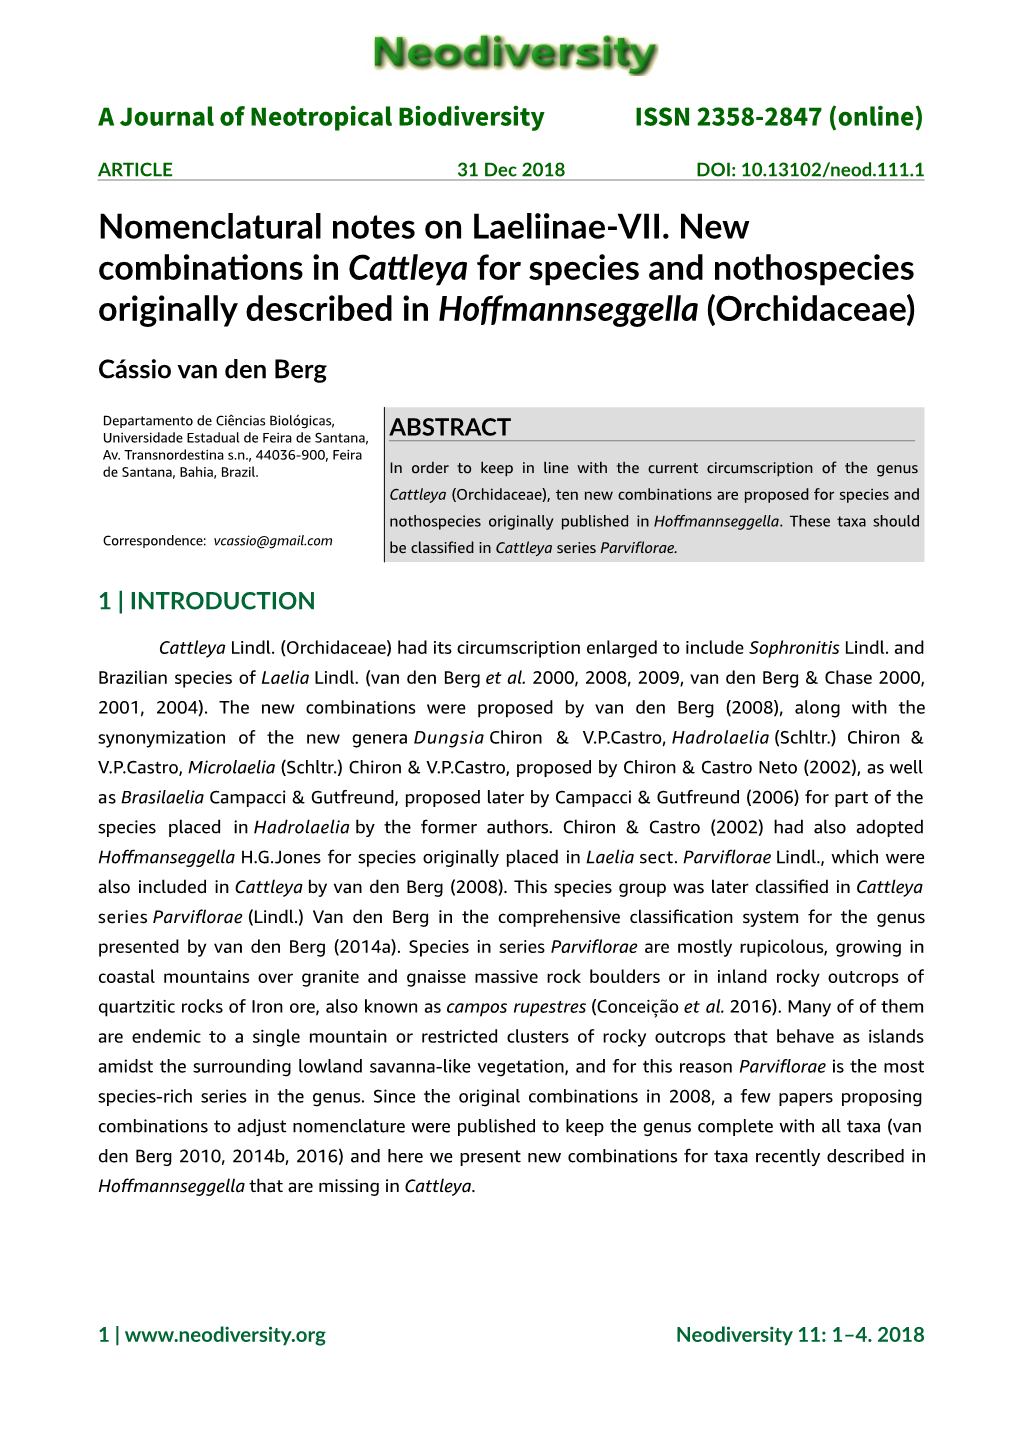 Nomenclatural Notes on Laeliinae-VII. New Combinations Incattleya for Species and Nothospecies Originally Described in Hoffmannseggella (Orchidaceae)